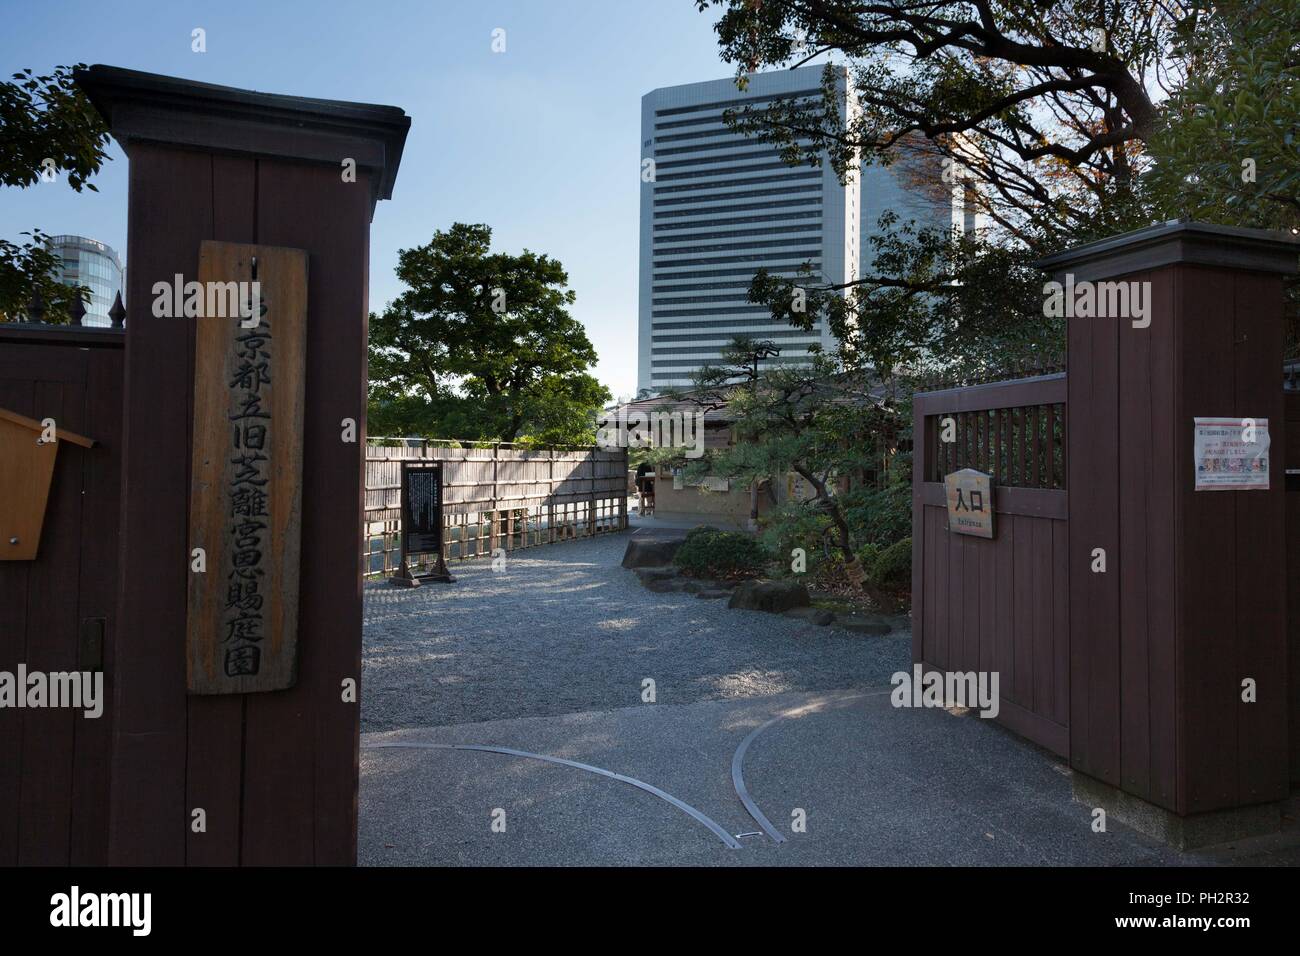 Porta d'ingresso al Kyu Shiba Rikyu Garden e l'area metropolitana grattacielo in background, Minato, Tokyo, Giappone, 7 dicembre 2017. () Foto Stock